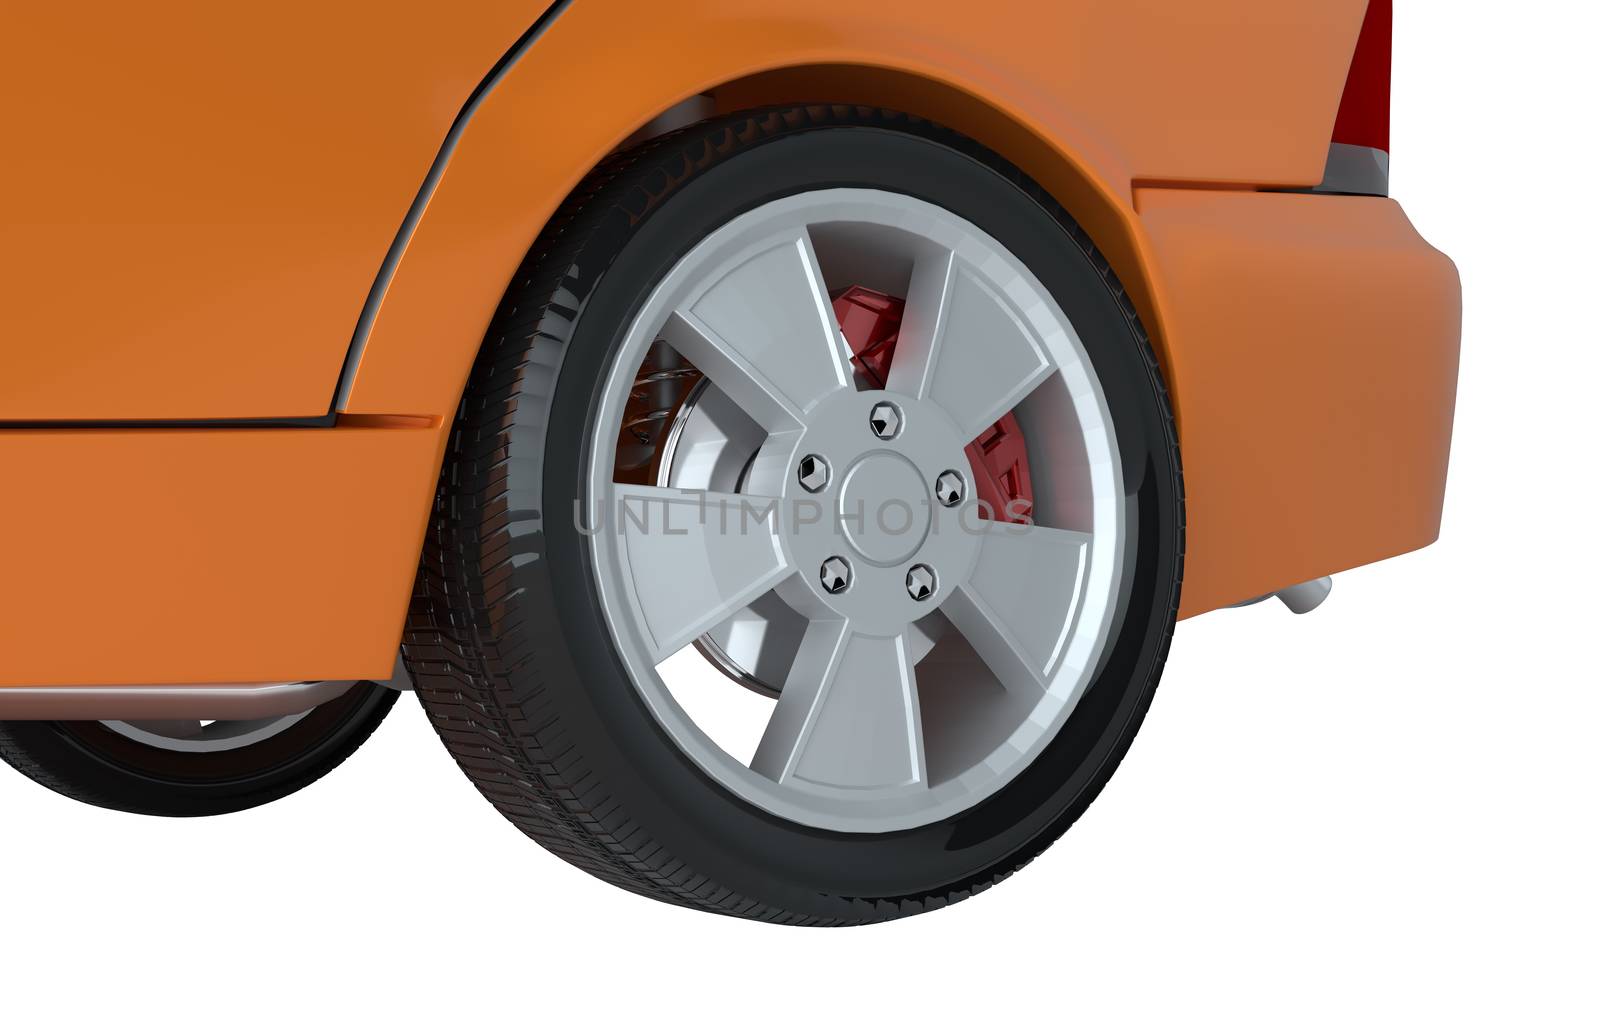 A CG render of a cars wheel. 3d illustration